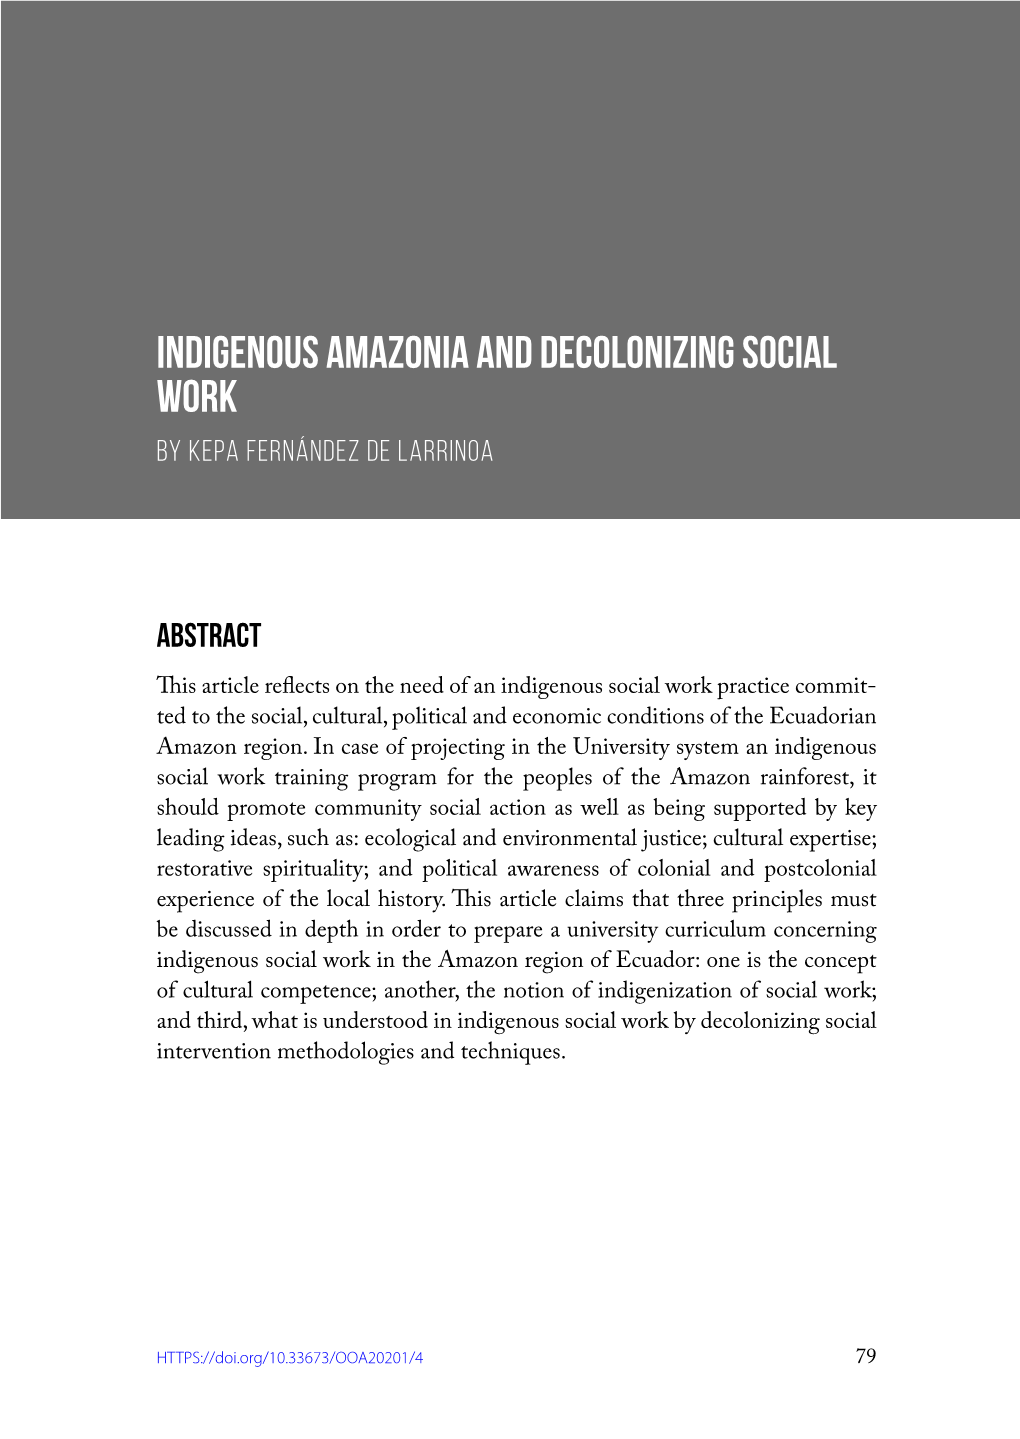 INDIGENOUS AMAZONIA and DECOLONIZING SOCIAL WORK by Kepa Fernández De Larrinoa